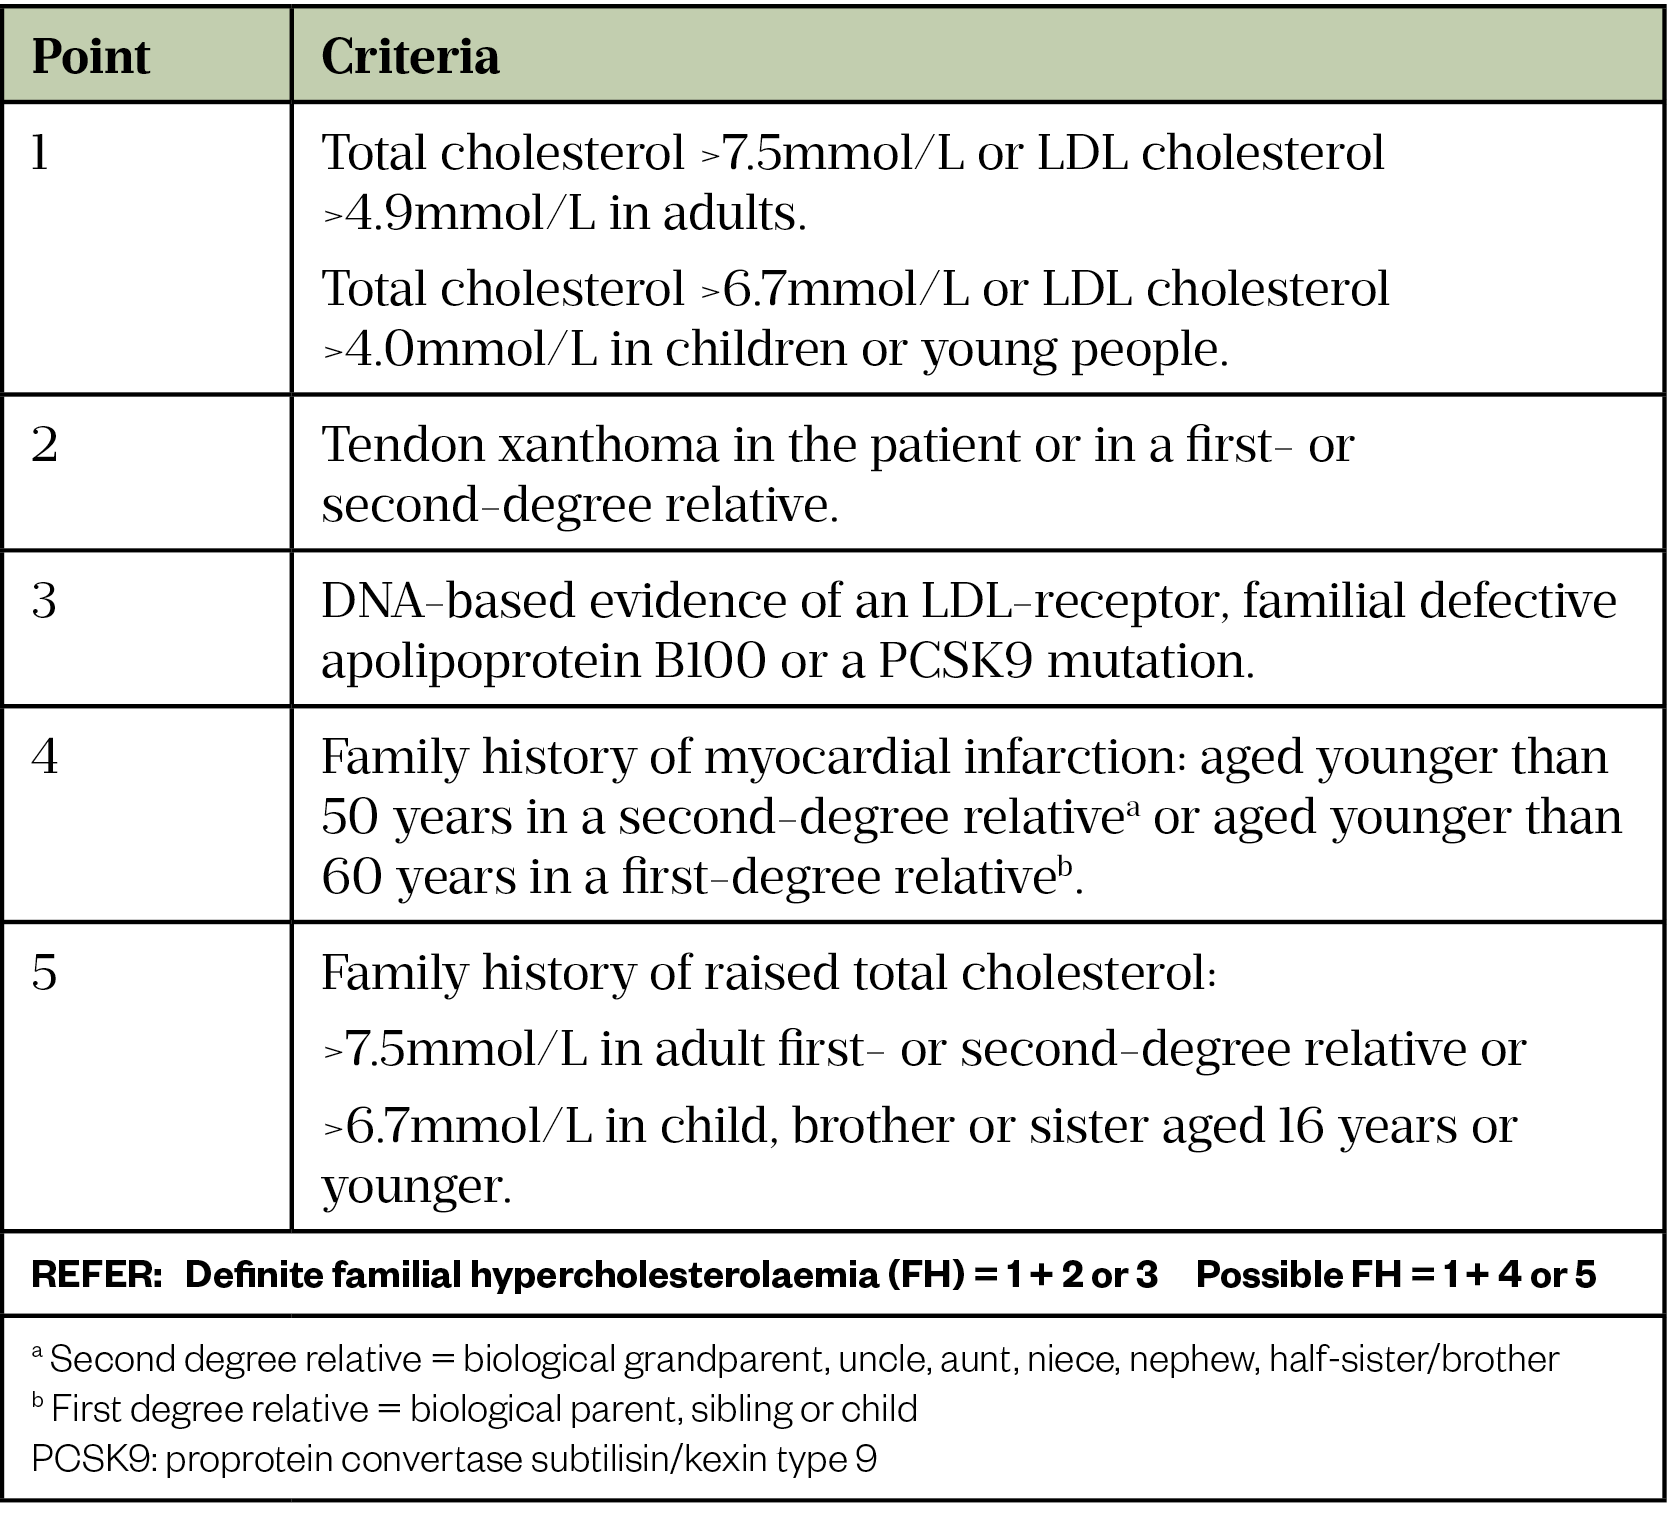 Table 1: Simon Broome criteria for familial hypercholesterolaemia